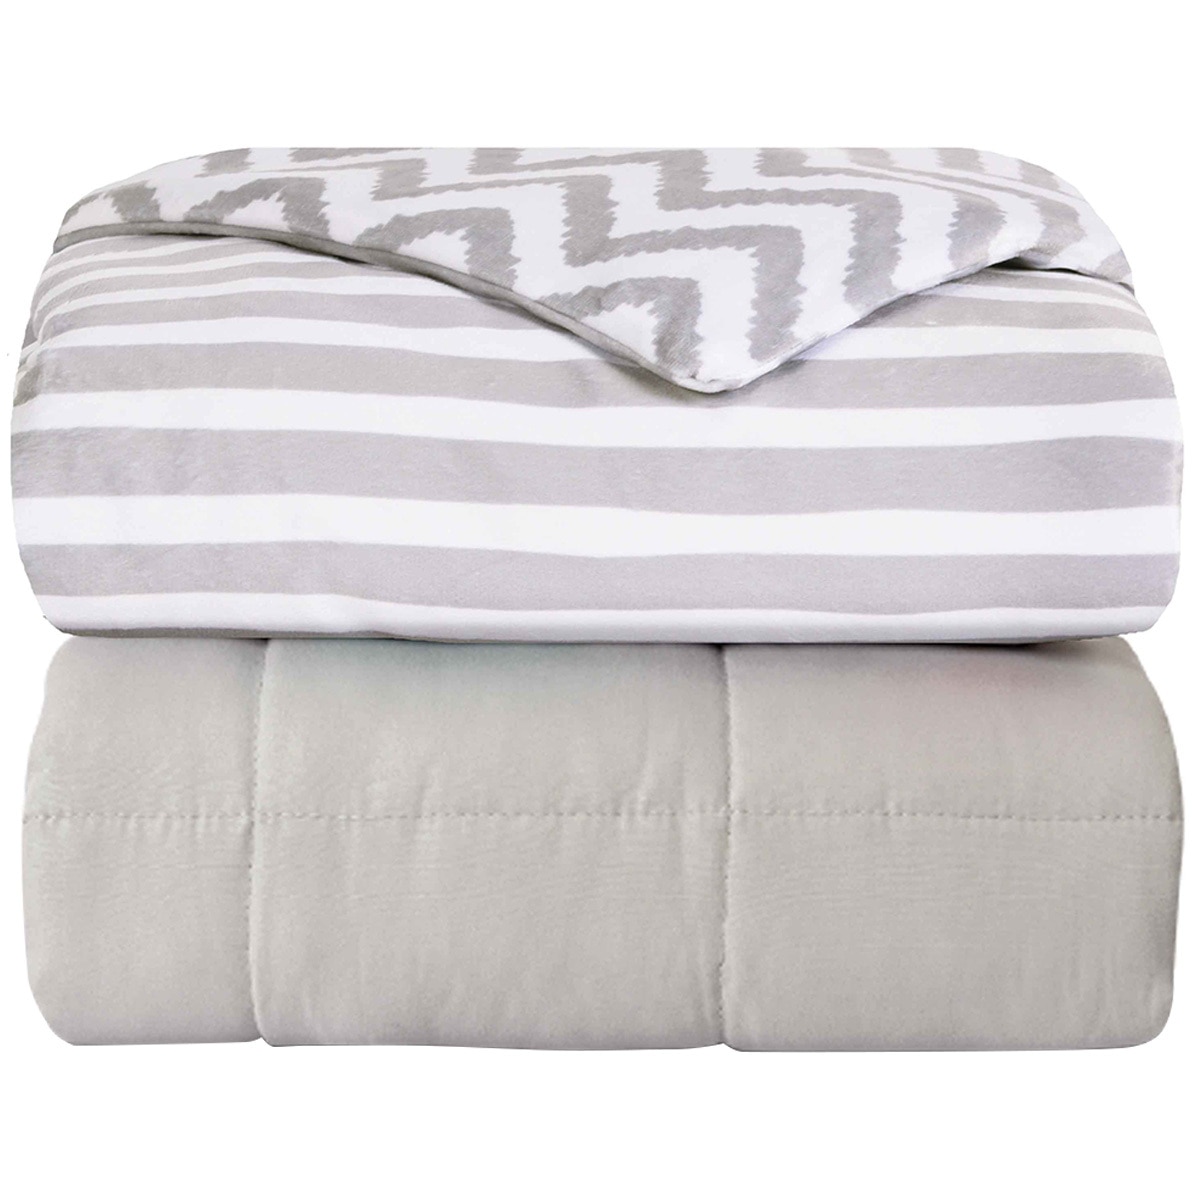 Life Comfort 23kg Weighted Blanket Costco Australia